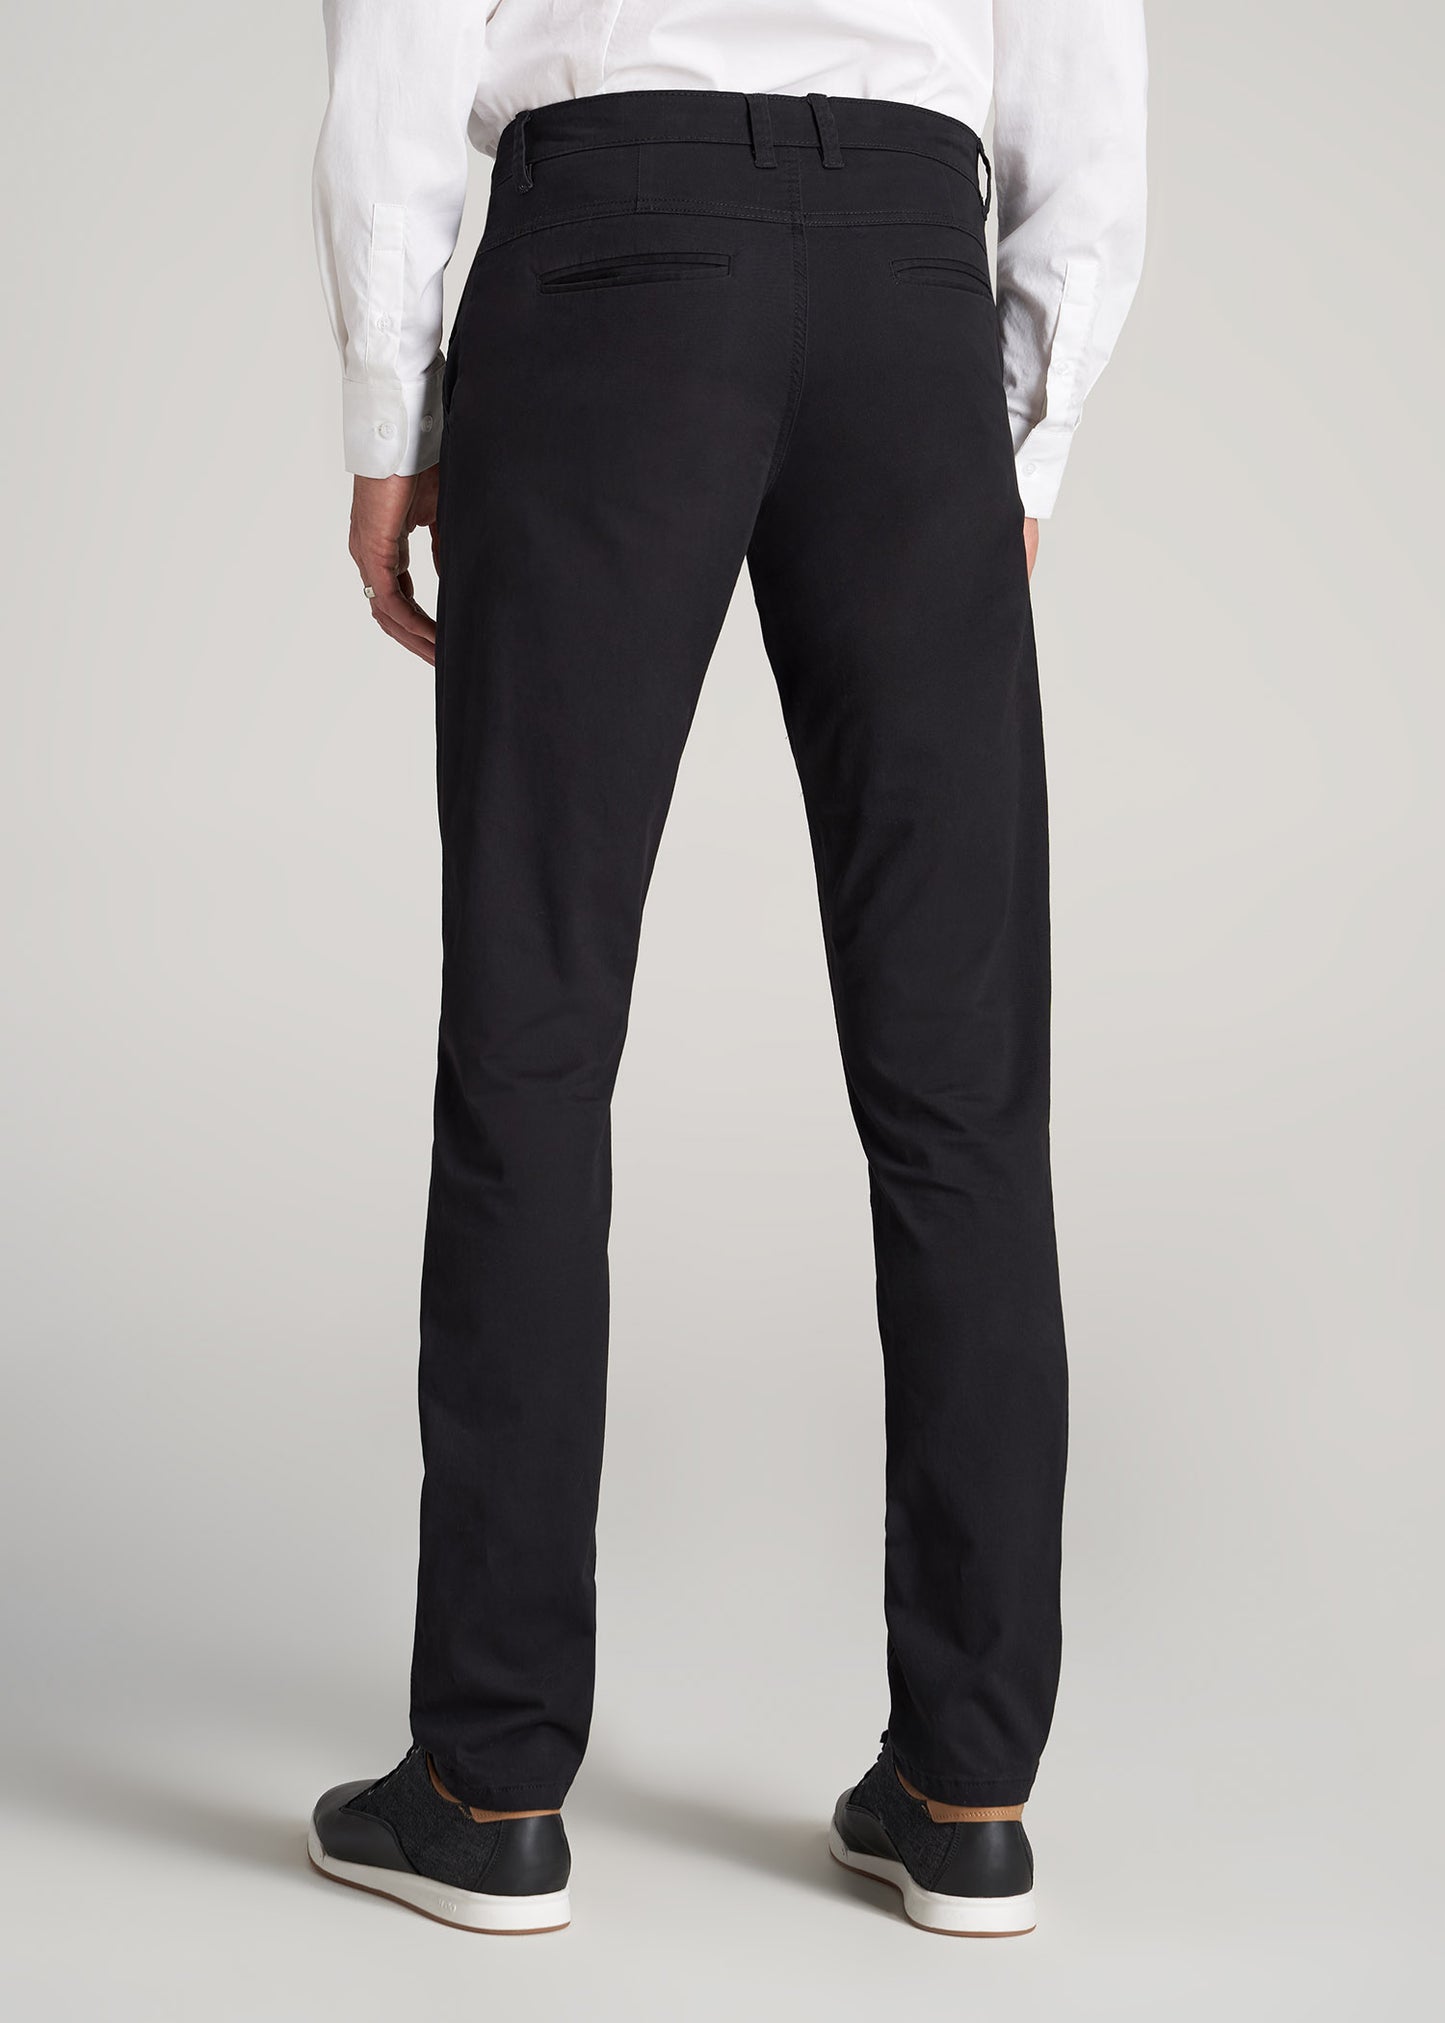 Buy American-Elm Slim Fit Black Formal Trouser for Men| Black Formal Pants  for Men at Amazon.in